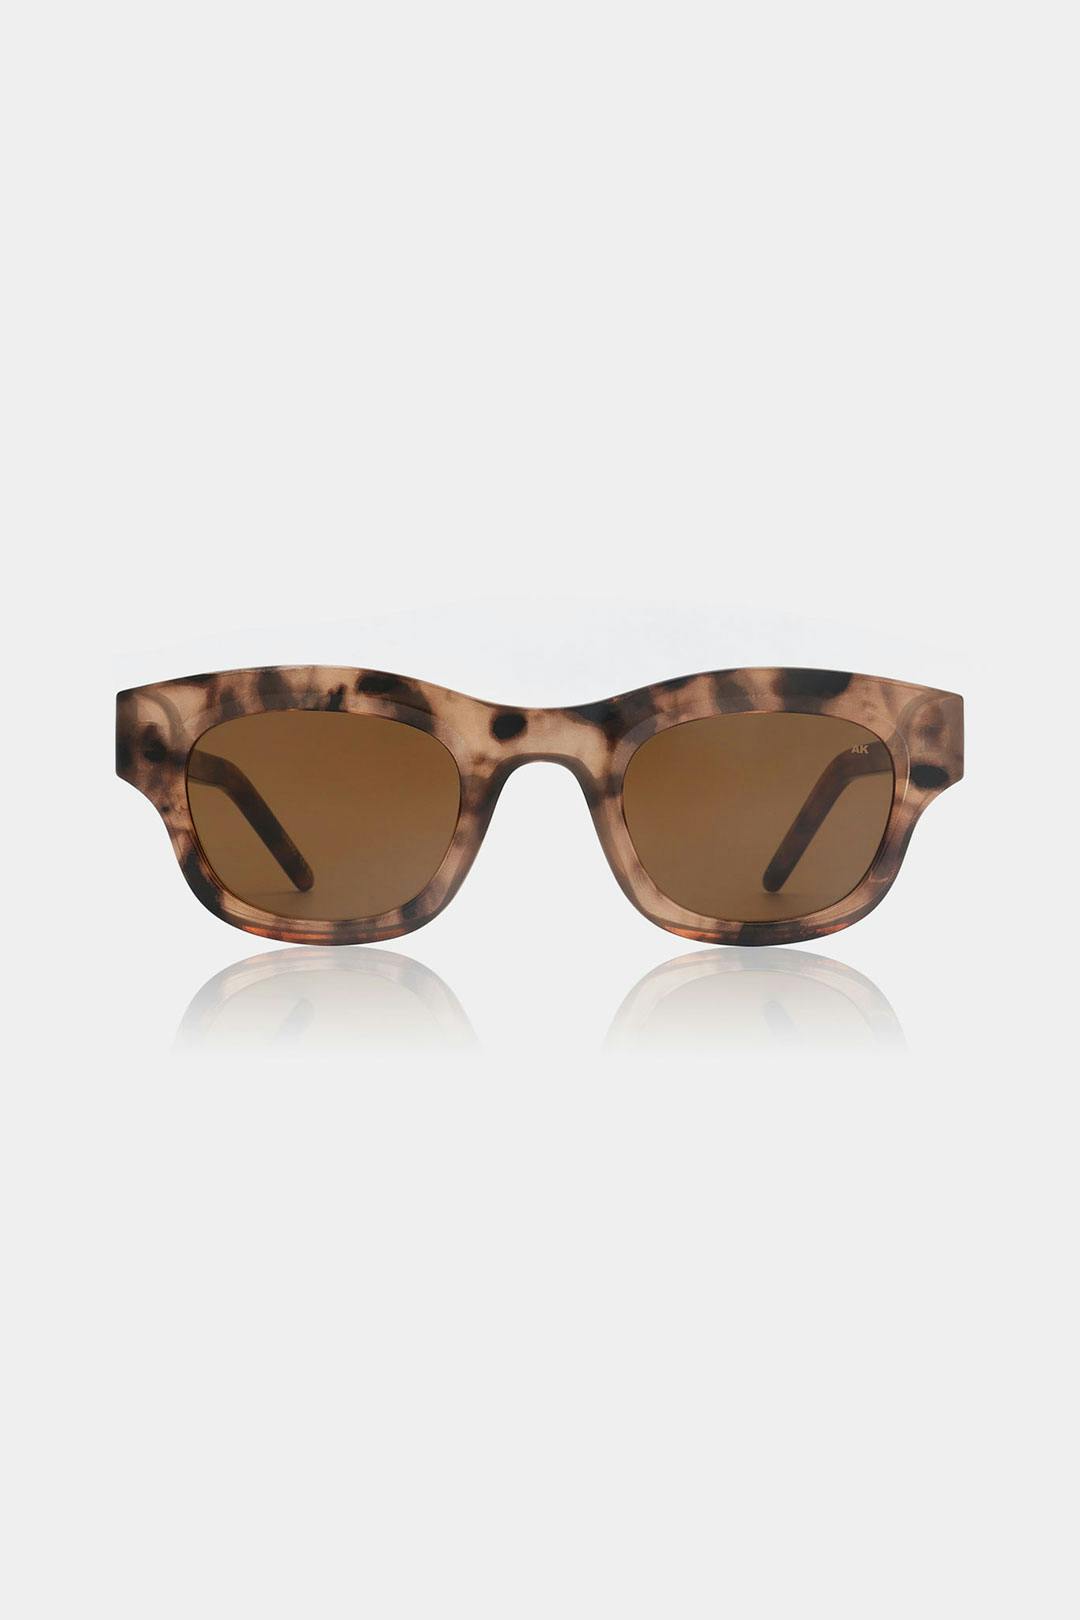 Lane sunglasses